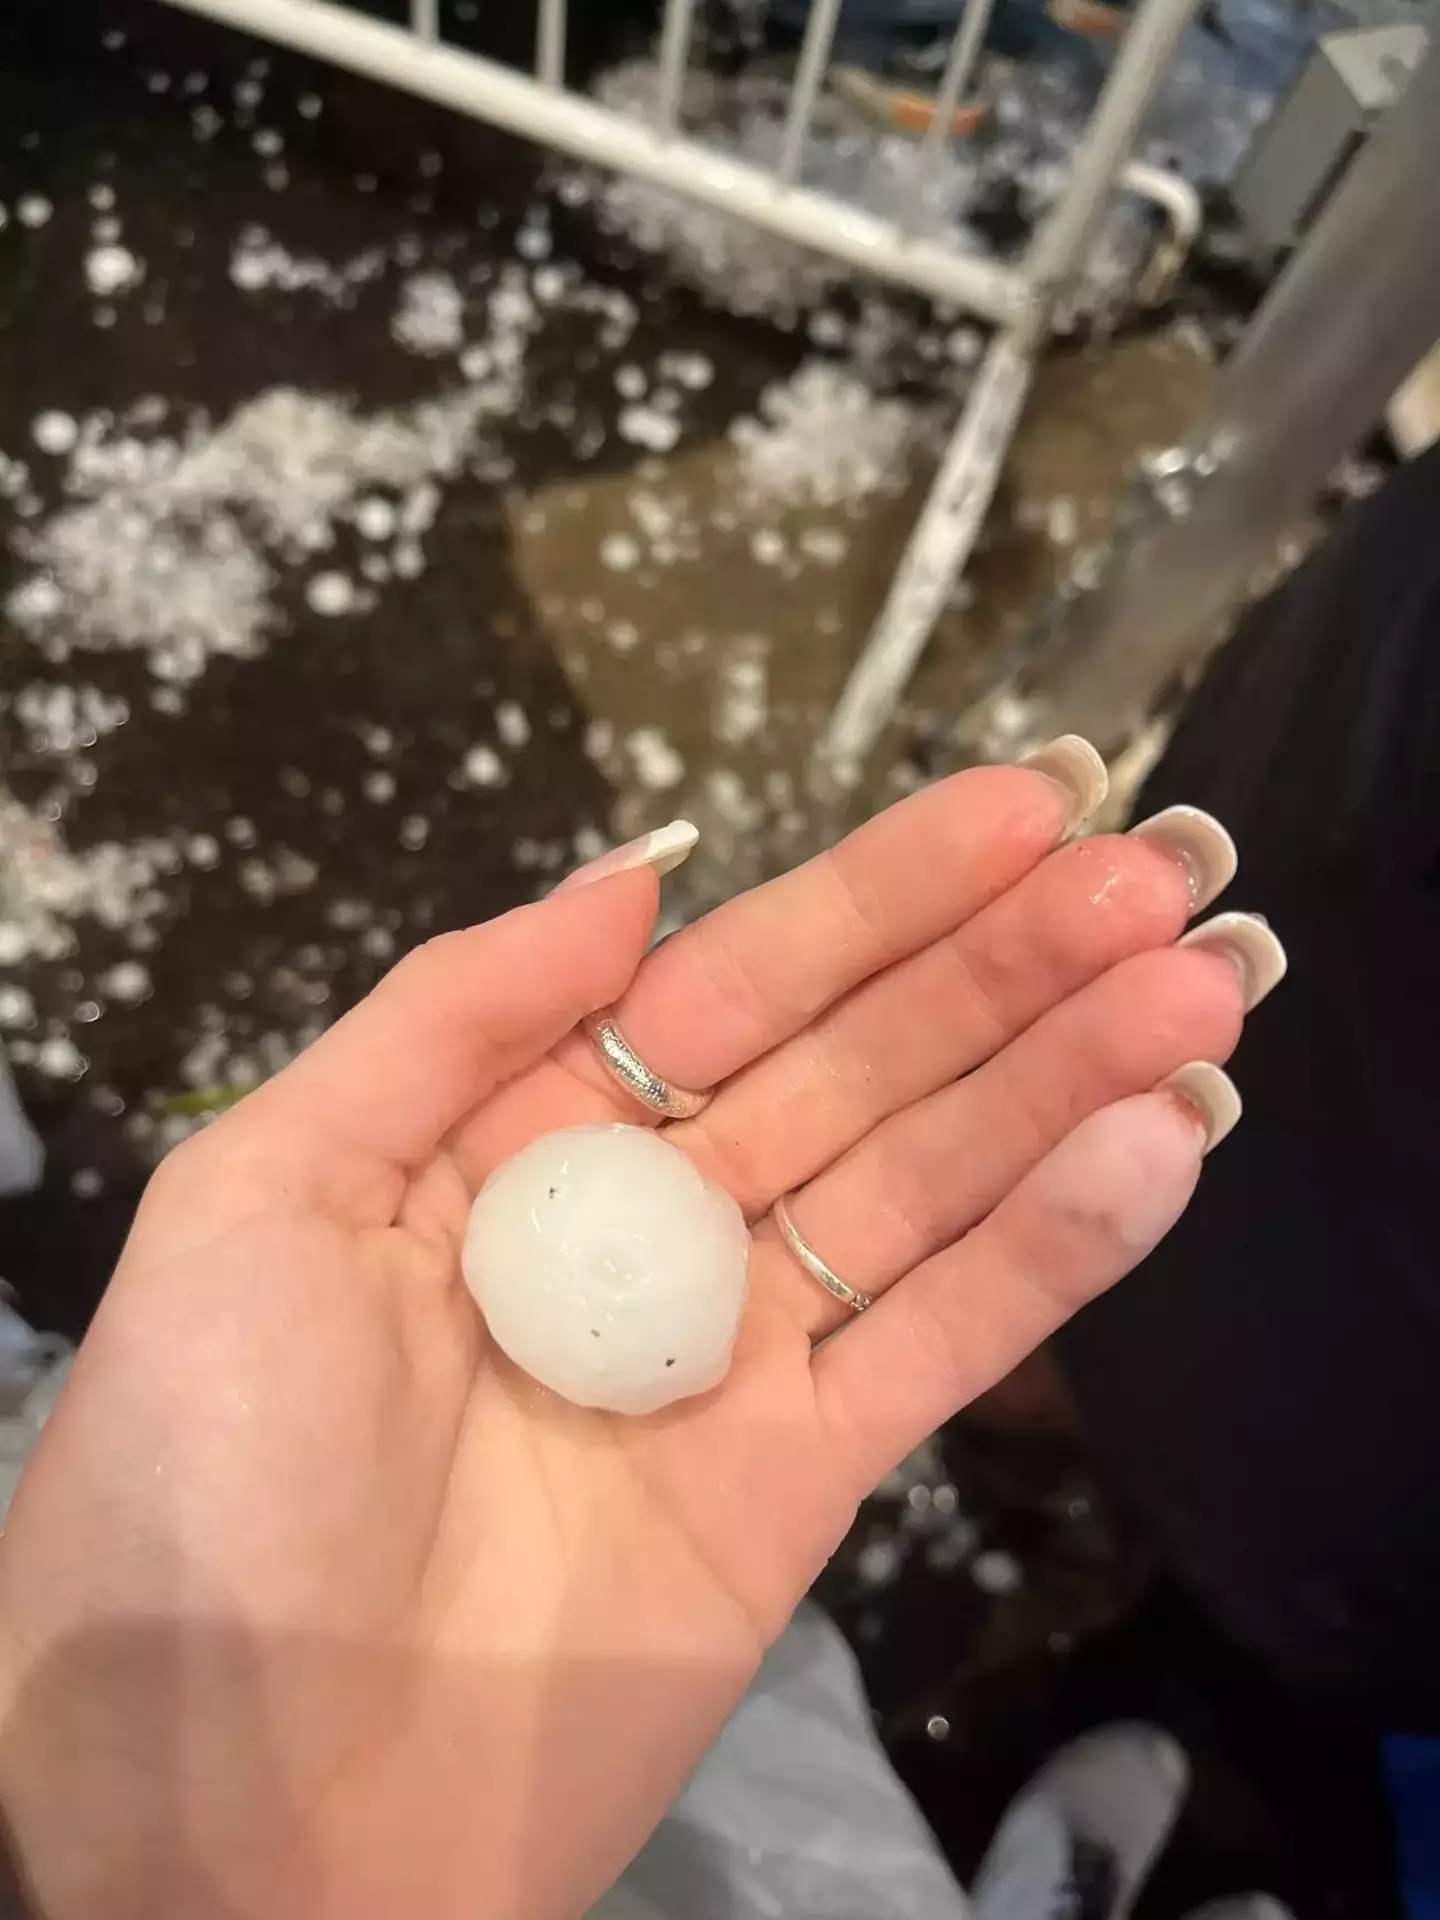 One fan shared a photo of a huge hailstone.